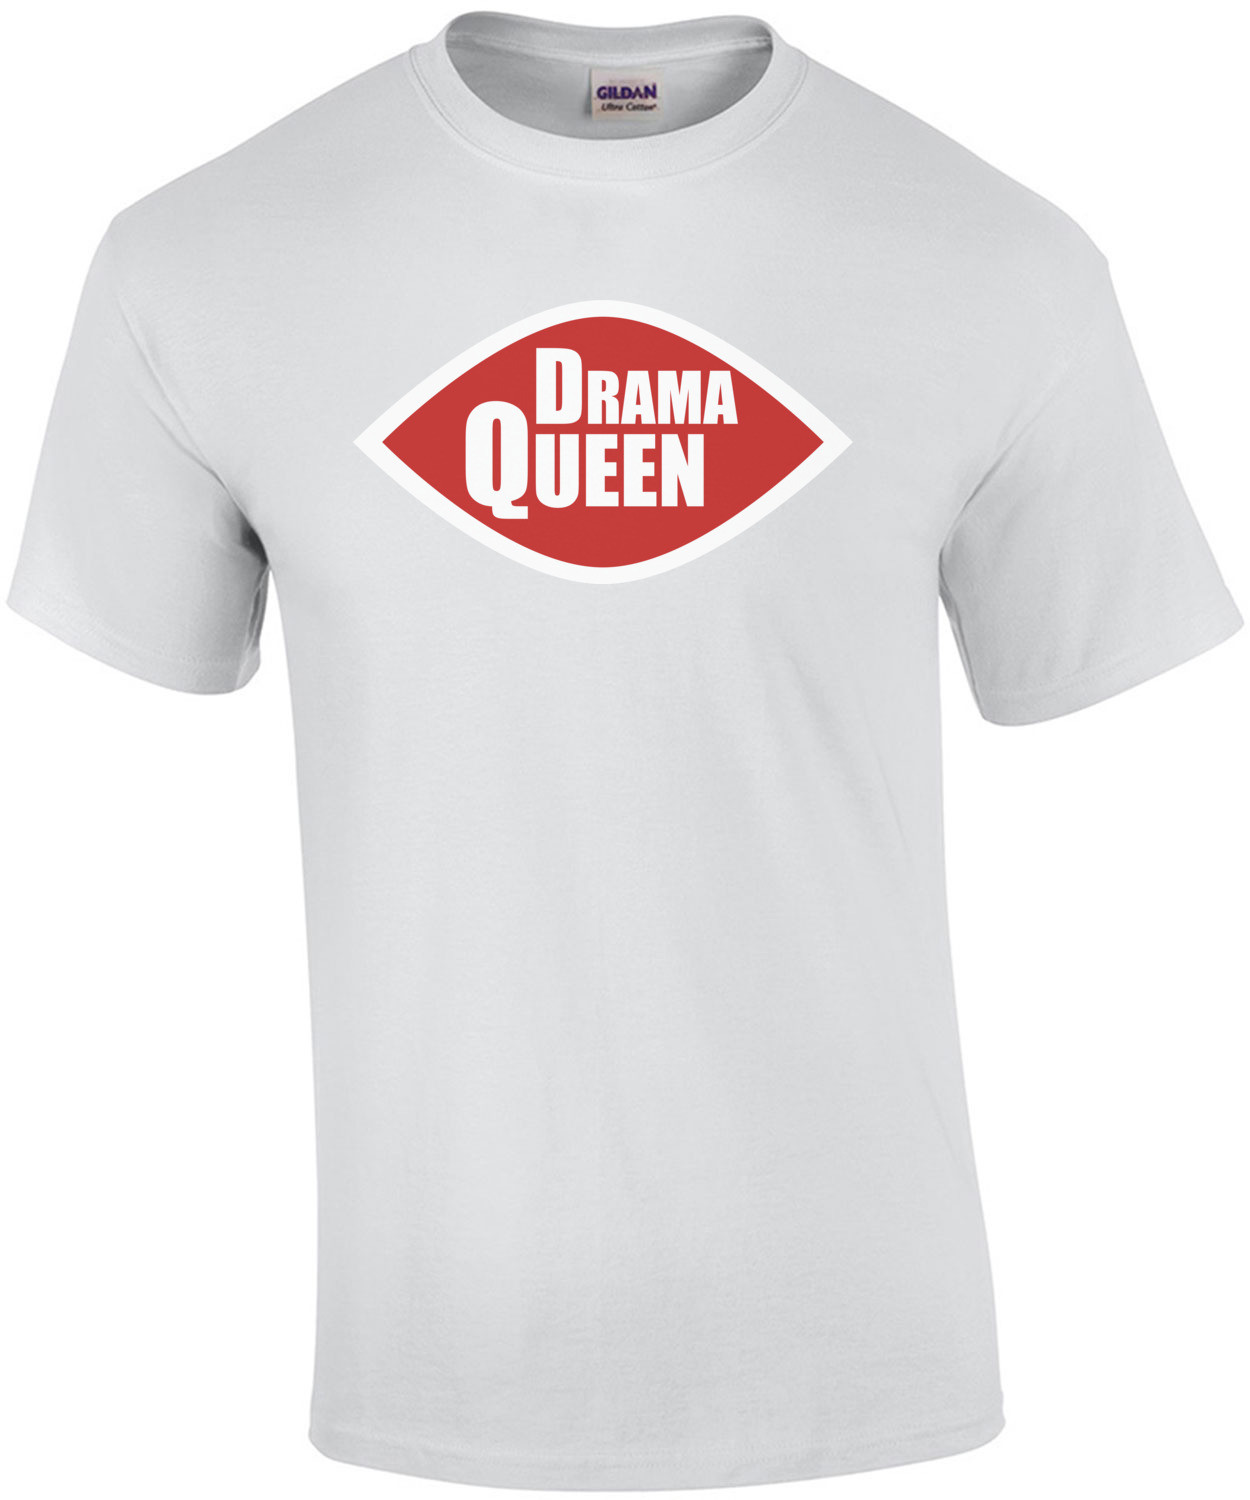 Drama Queen - Dairy Queen Parody T-Shirt